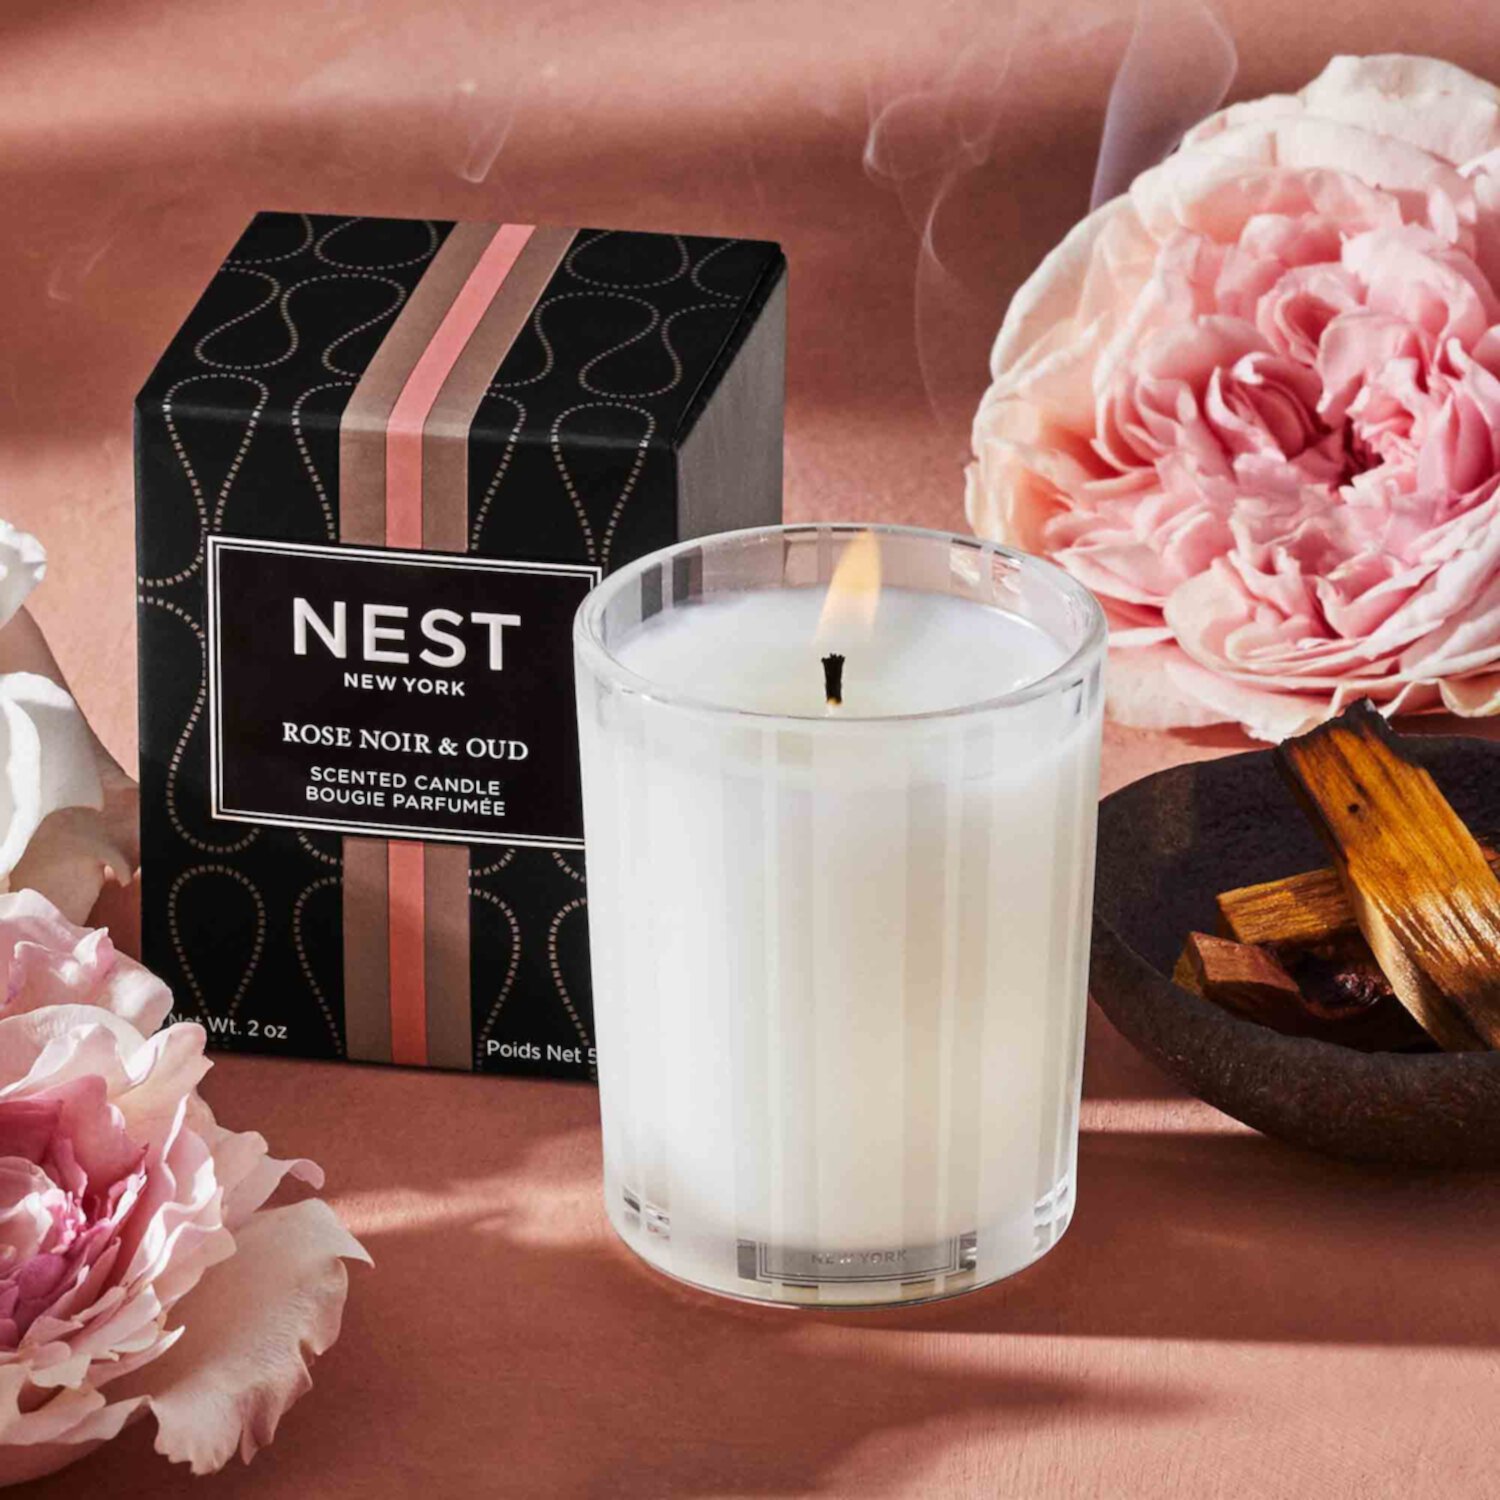 Rose Noir & Oud Votive Candle Nest New York